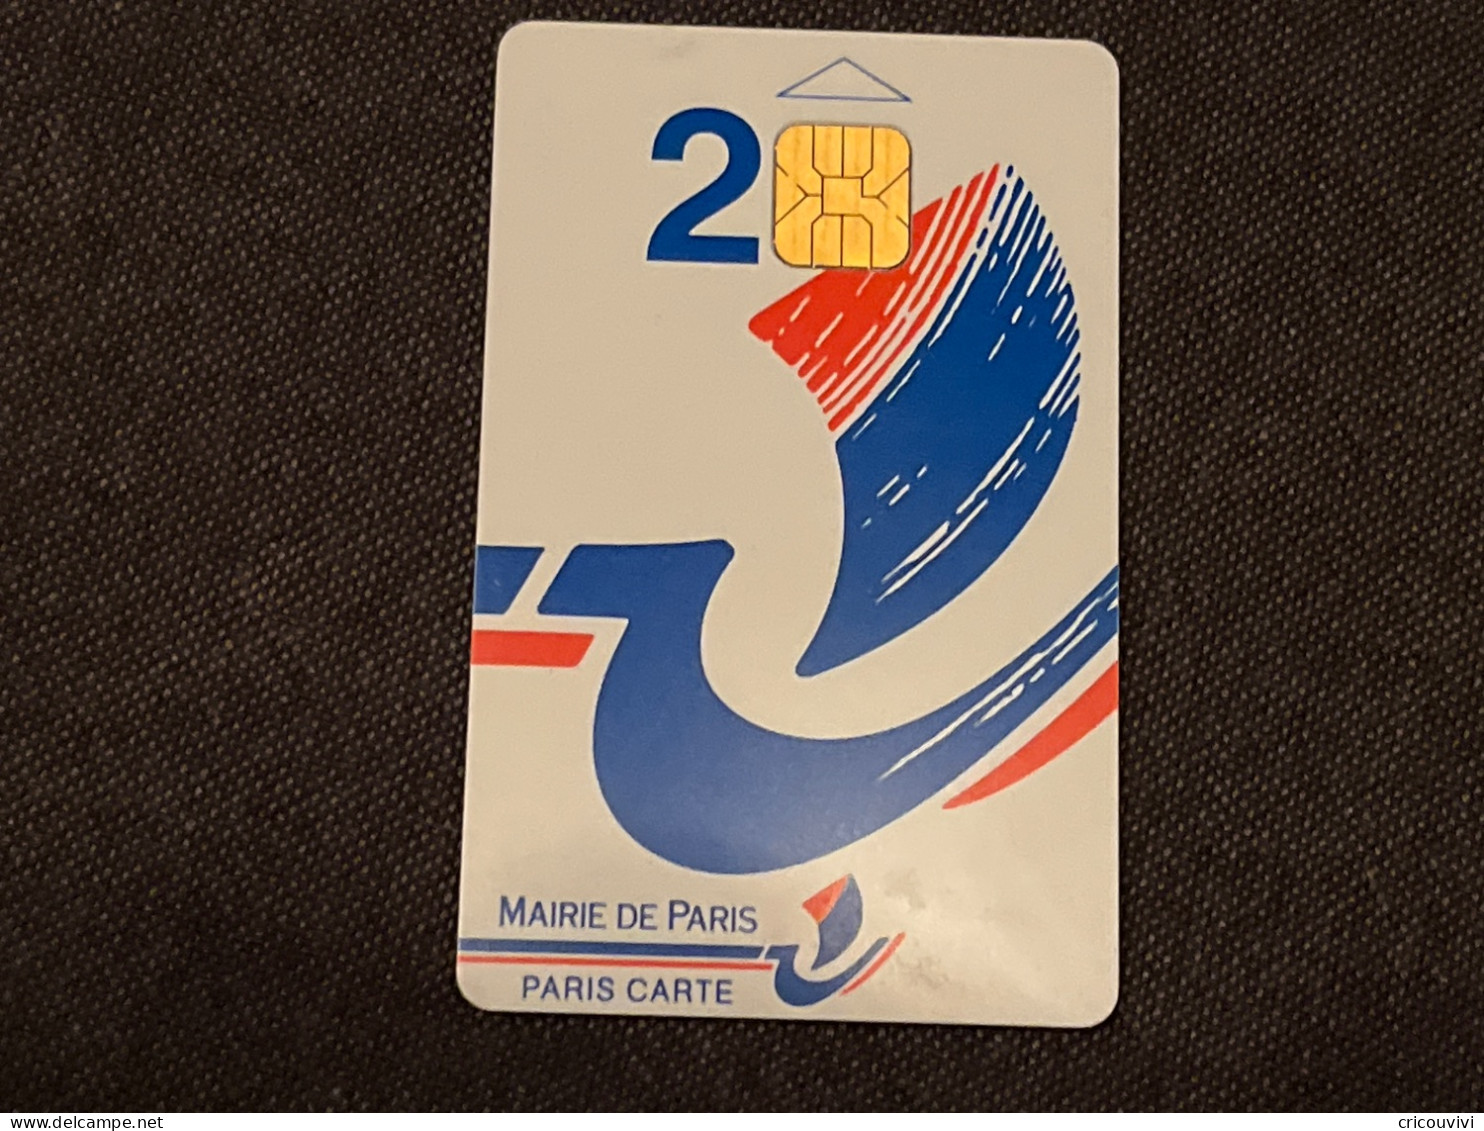 Paris Carte 18 - Parkkarten